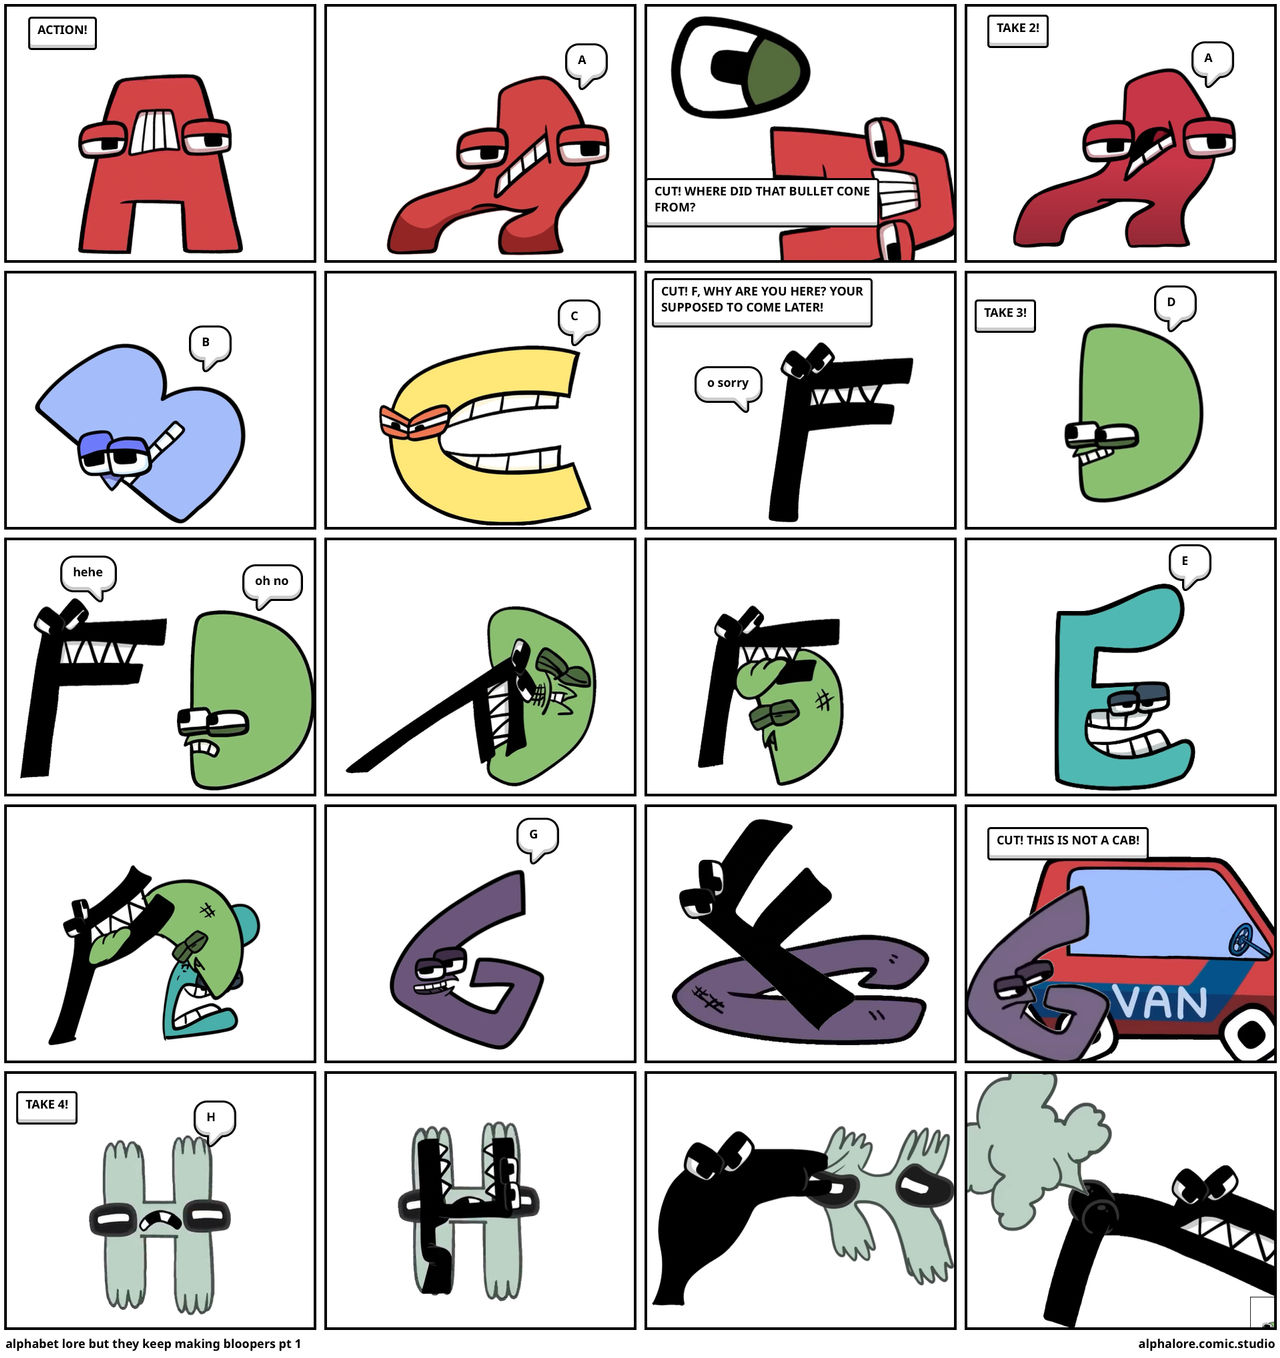 Alphabet Lore but on ! - Comic Studio